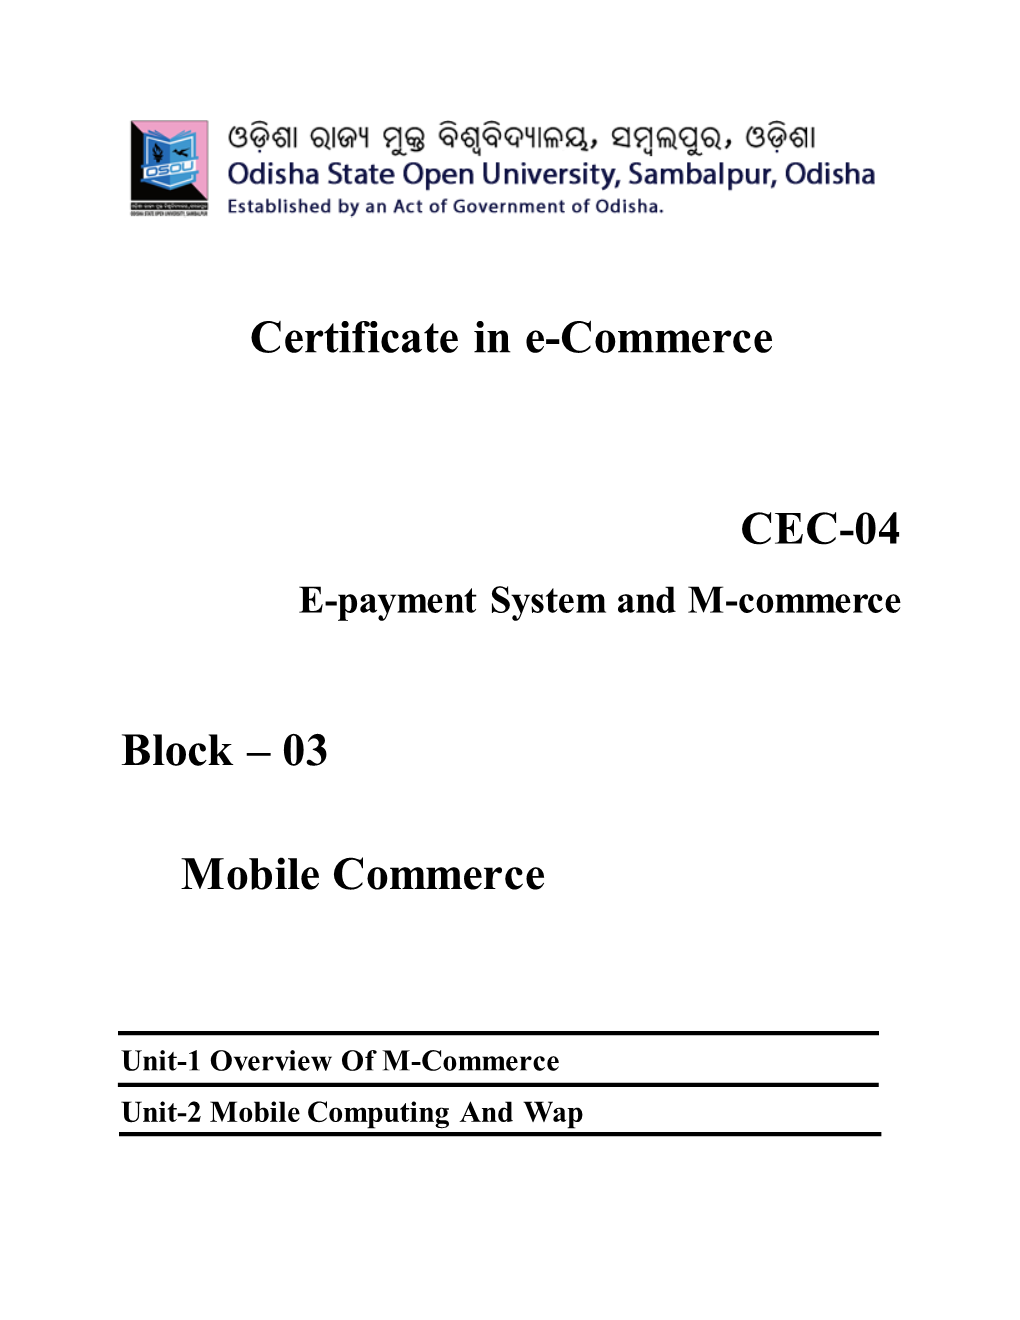 Block – 03 Mobile Commerce